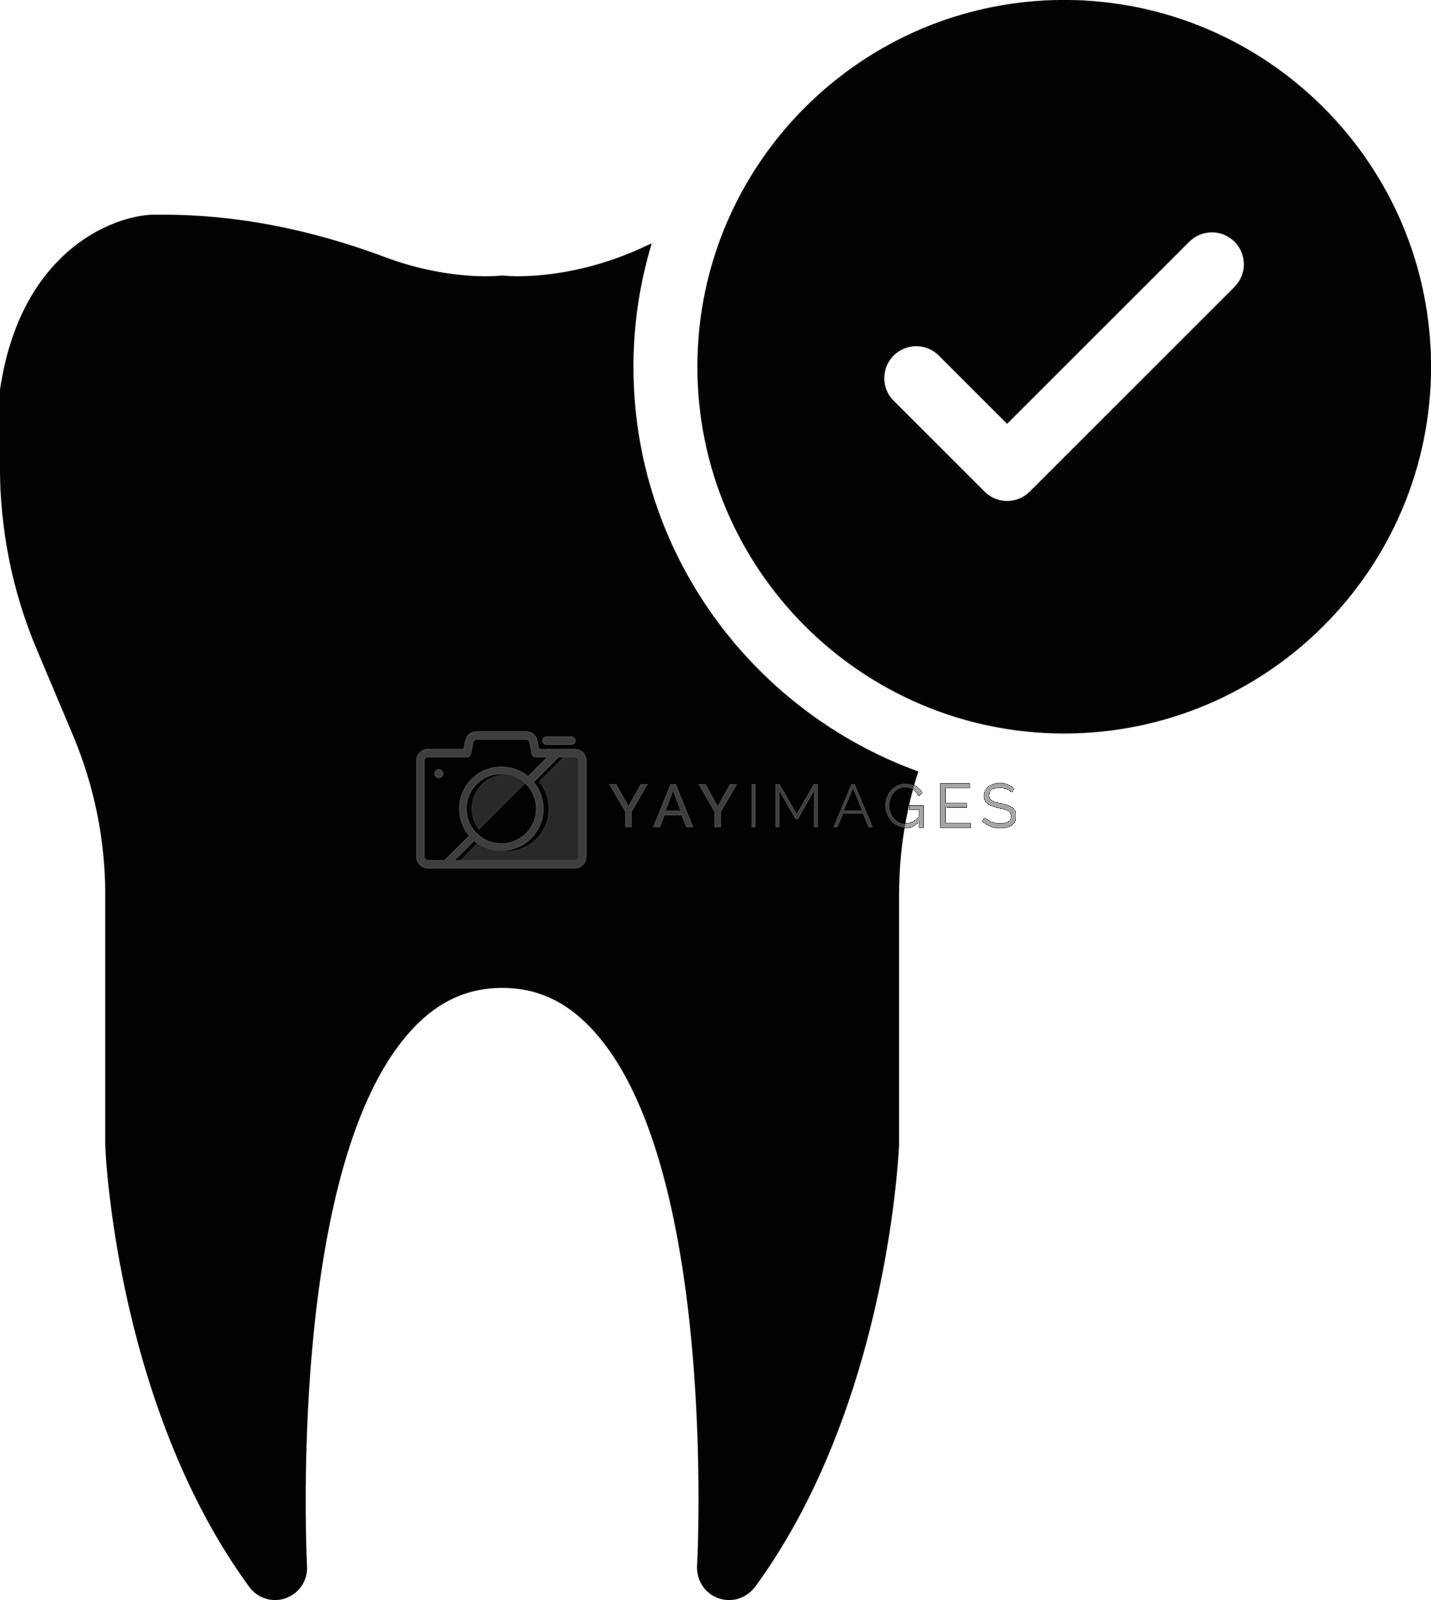 Royalty free image of teeth mark by vectorstall